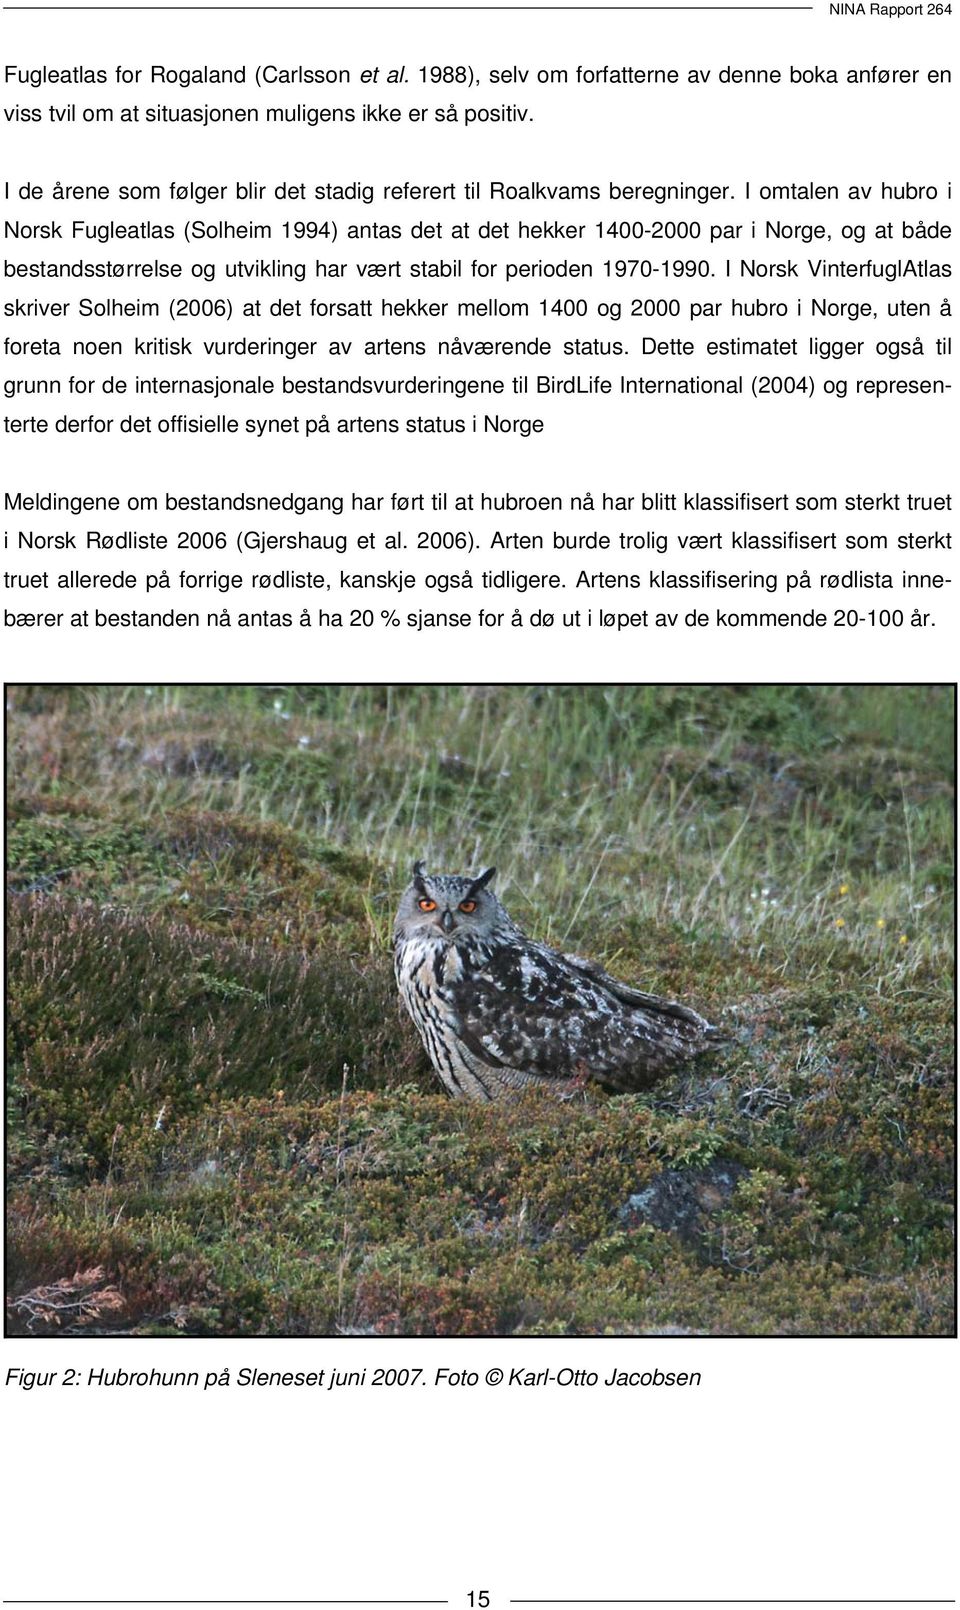 I omtalen av hubro i Norsk Fugleatlas (Solheim 1994) antas det at det hekker 1400-2000 par i Norge, og at både bestandsstørrelse og utvikling har vært stabil for perioden 1970-1990.